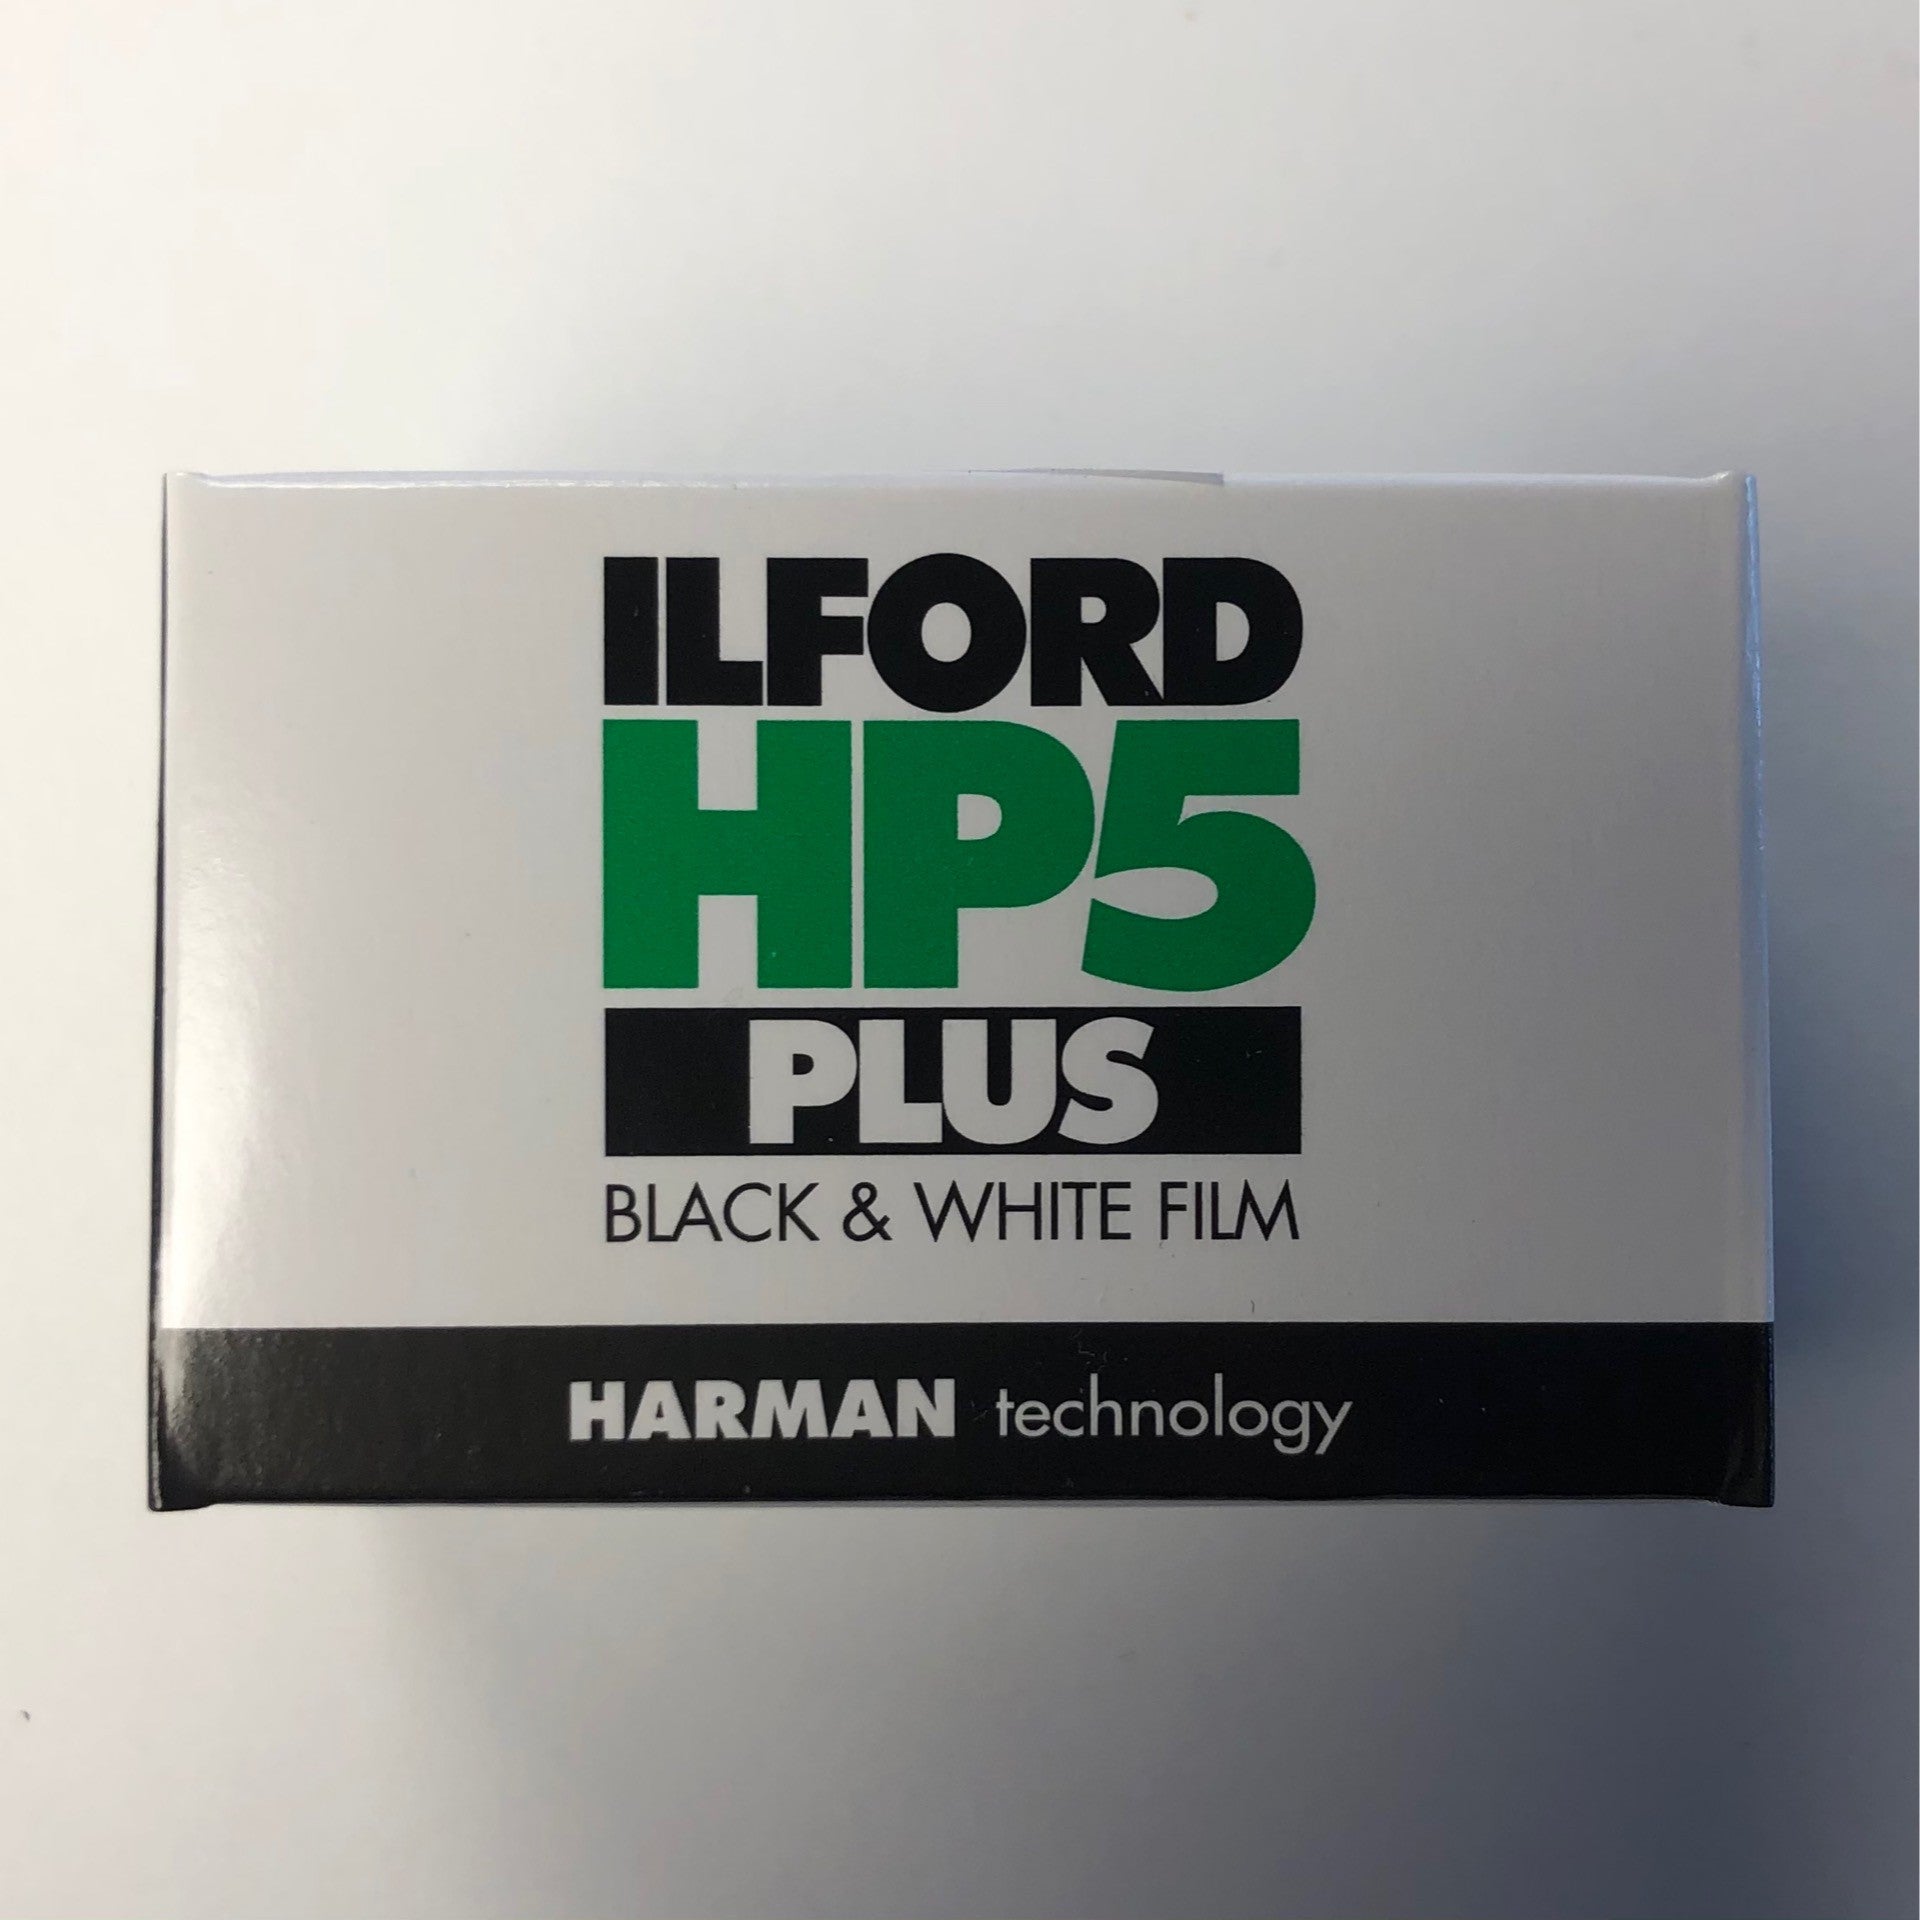 ILFORD HP5 400 35mm